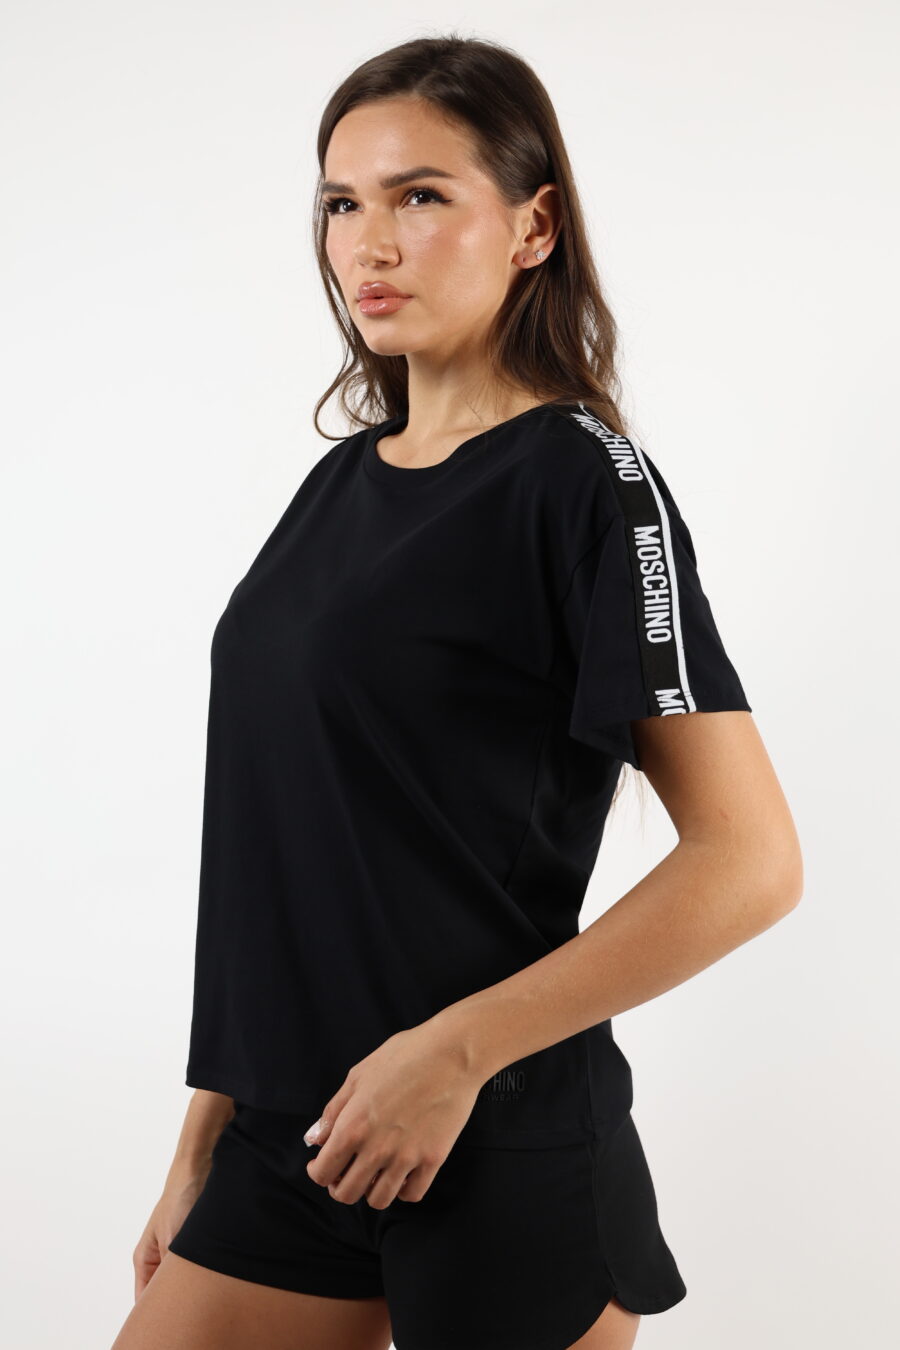 Black T-shirt with white logo on shoulder band - 110494